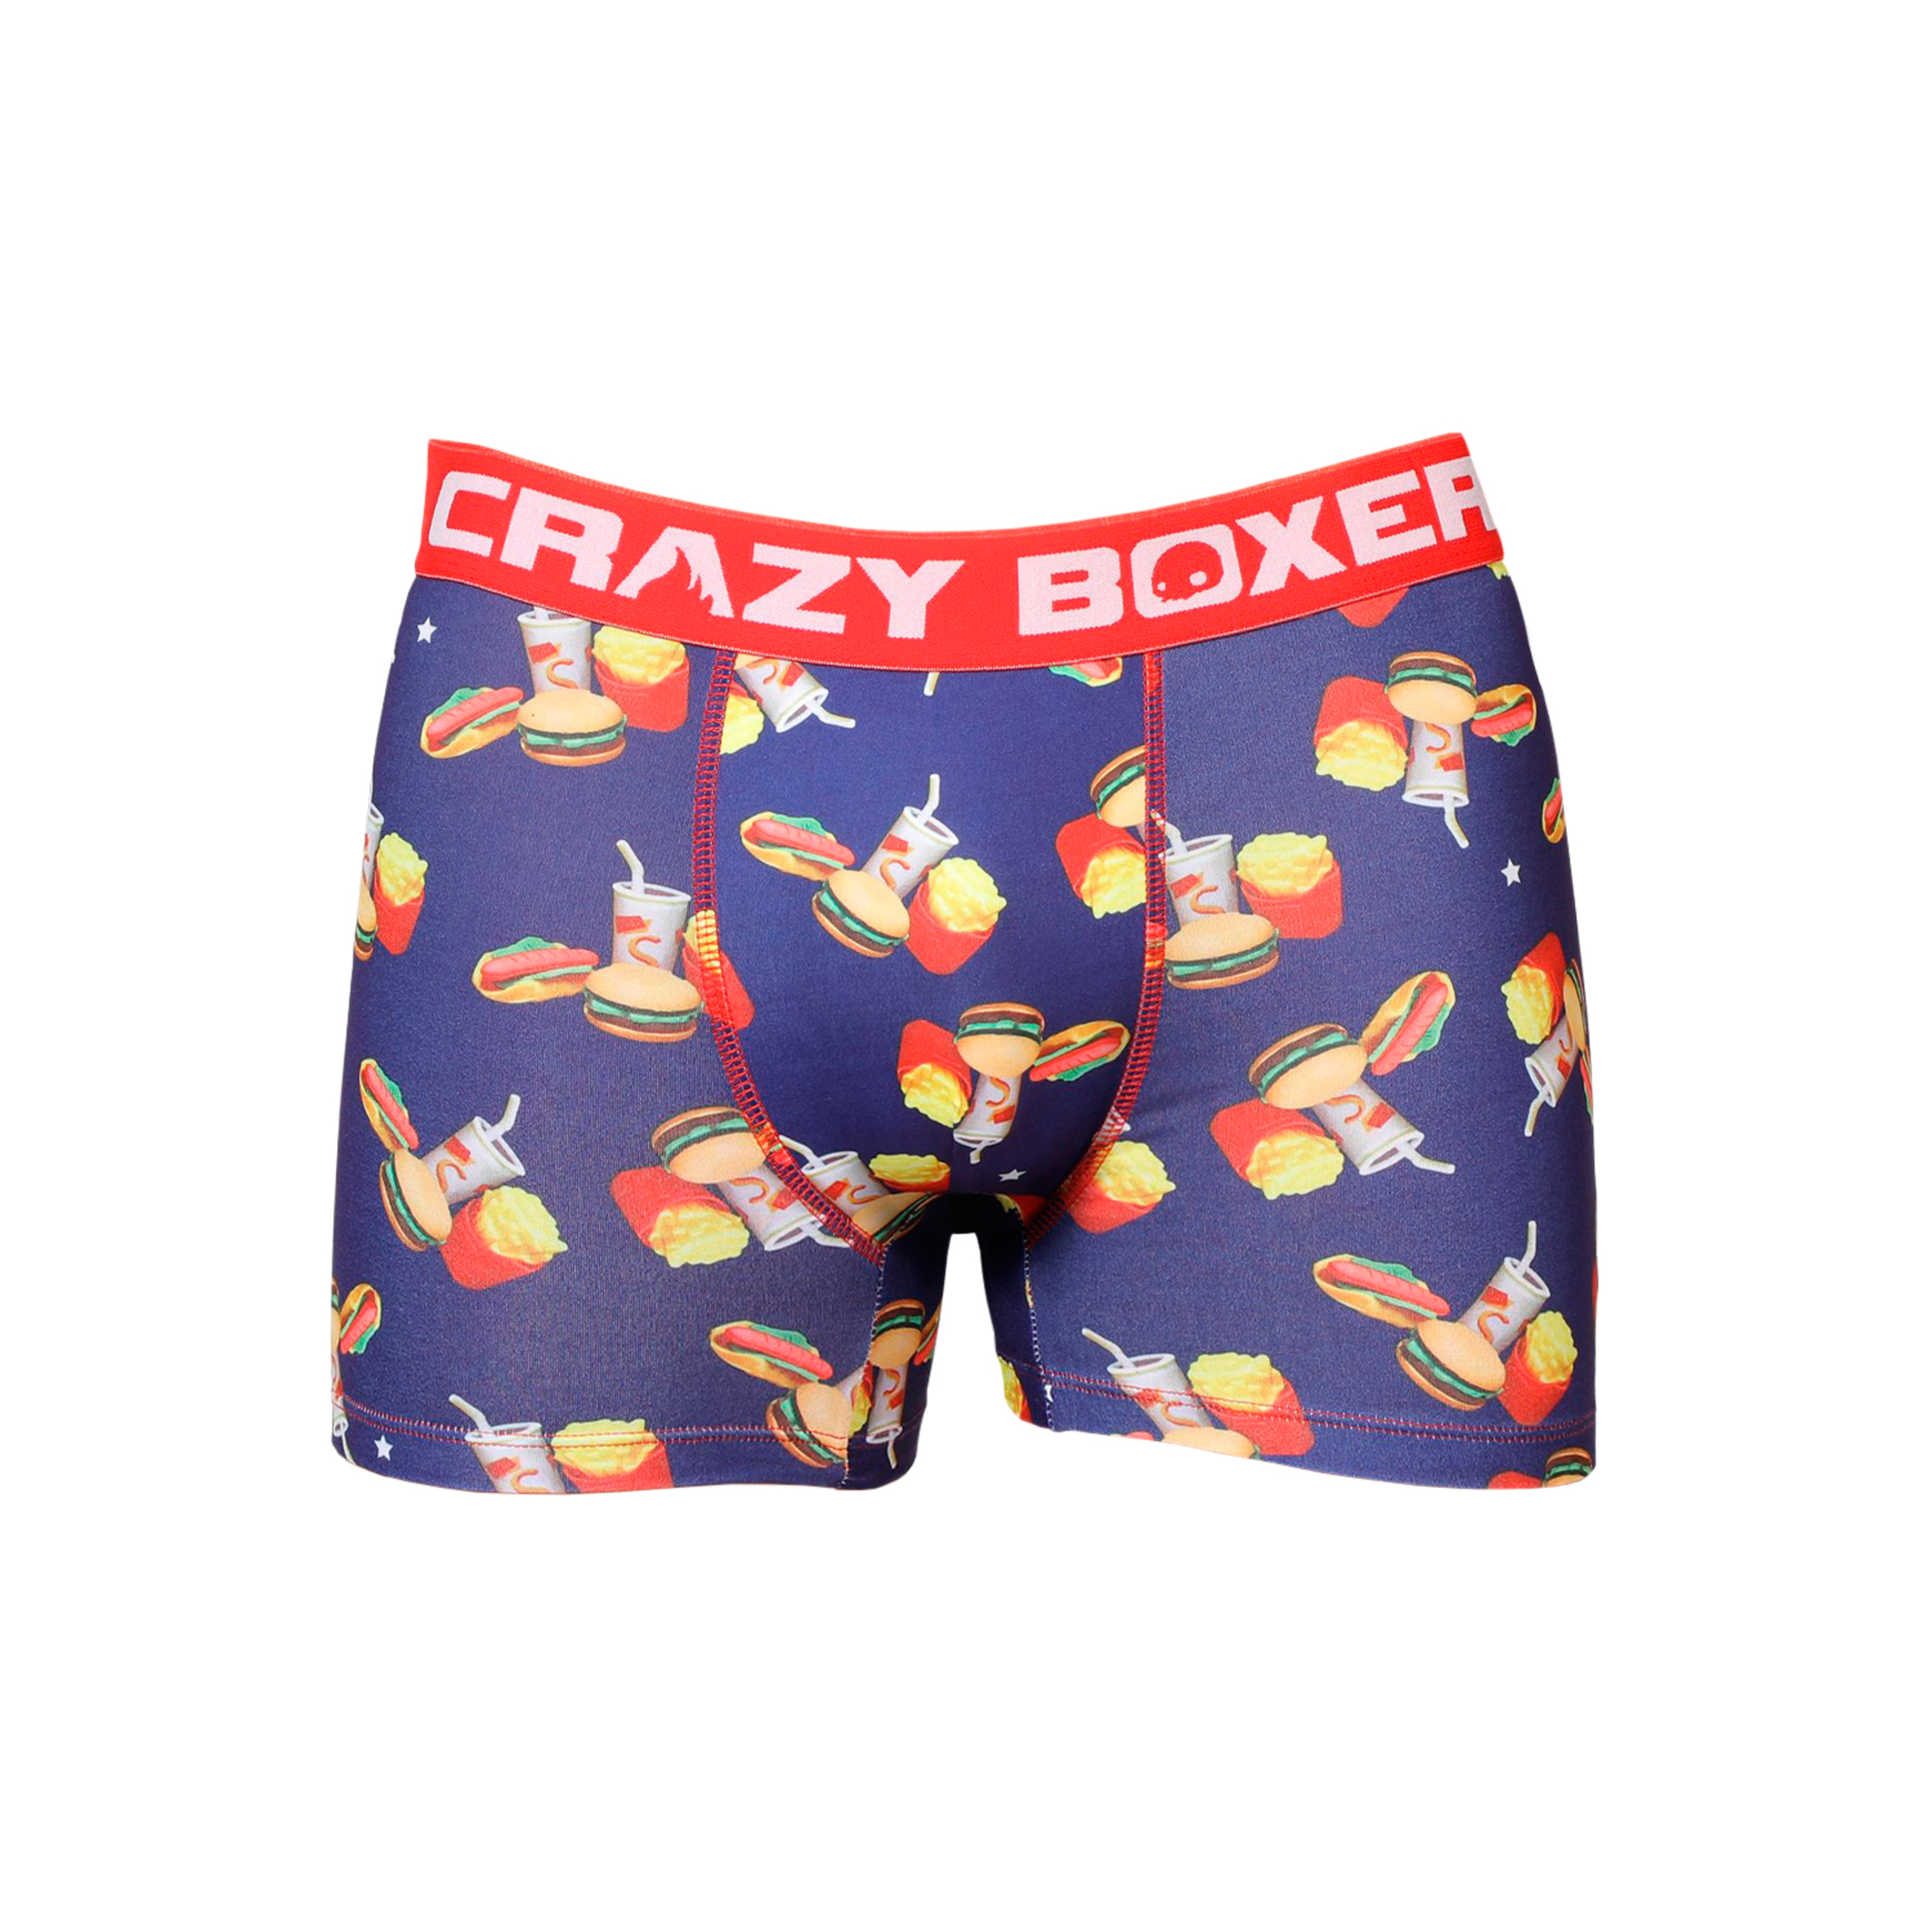 Calzoncillo Hamburguesas Crazy Boxer - multicolor - 